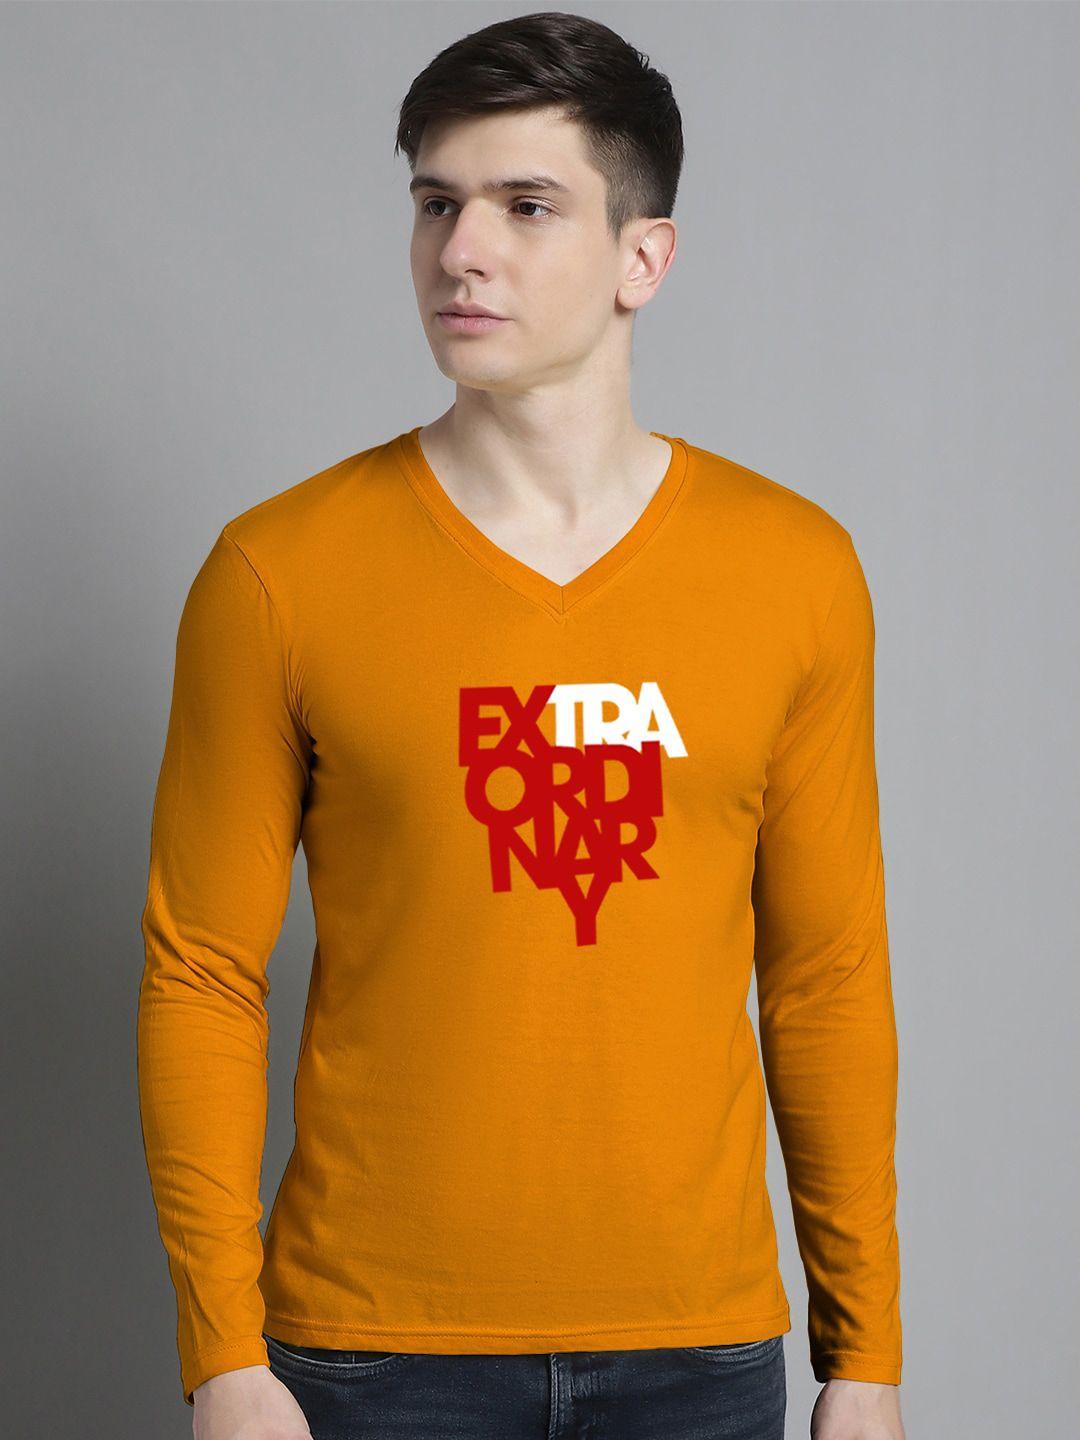 fbar typographic printed v-neck slim fit cotton t-shirt